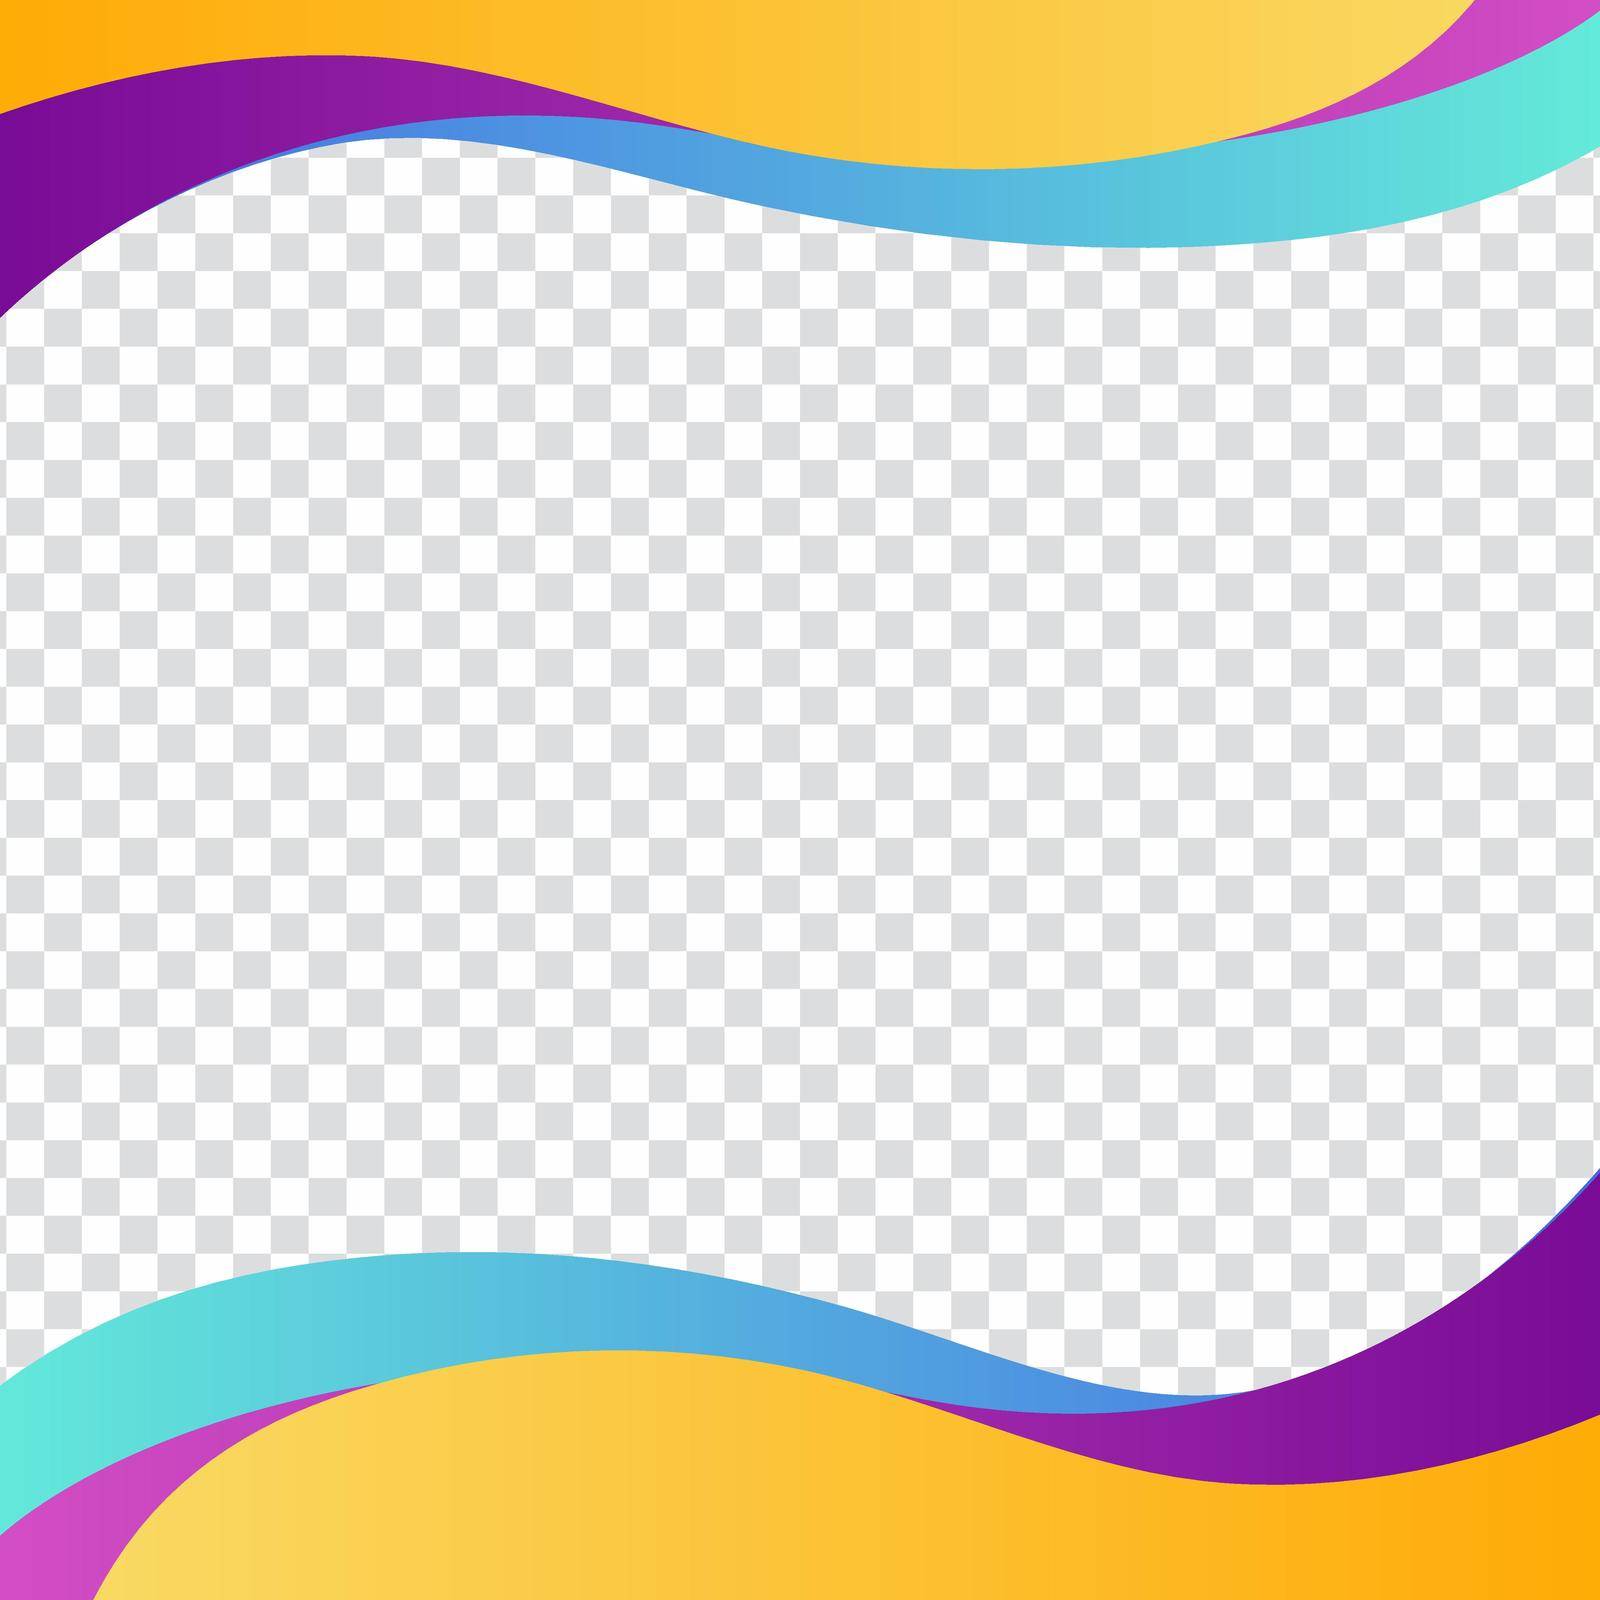 Square banner template design. Colorful curve social media frame for banner or brochure flyer. by windawake